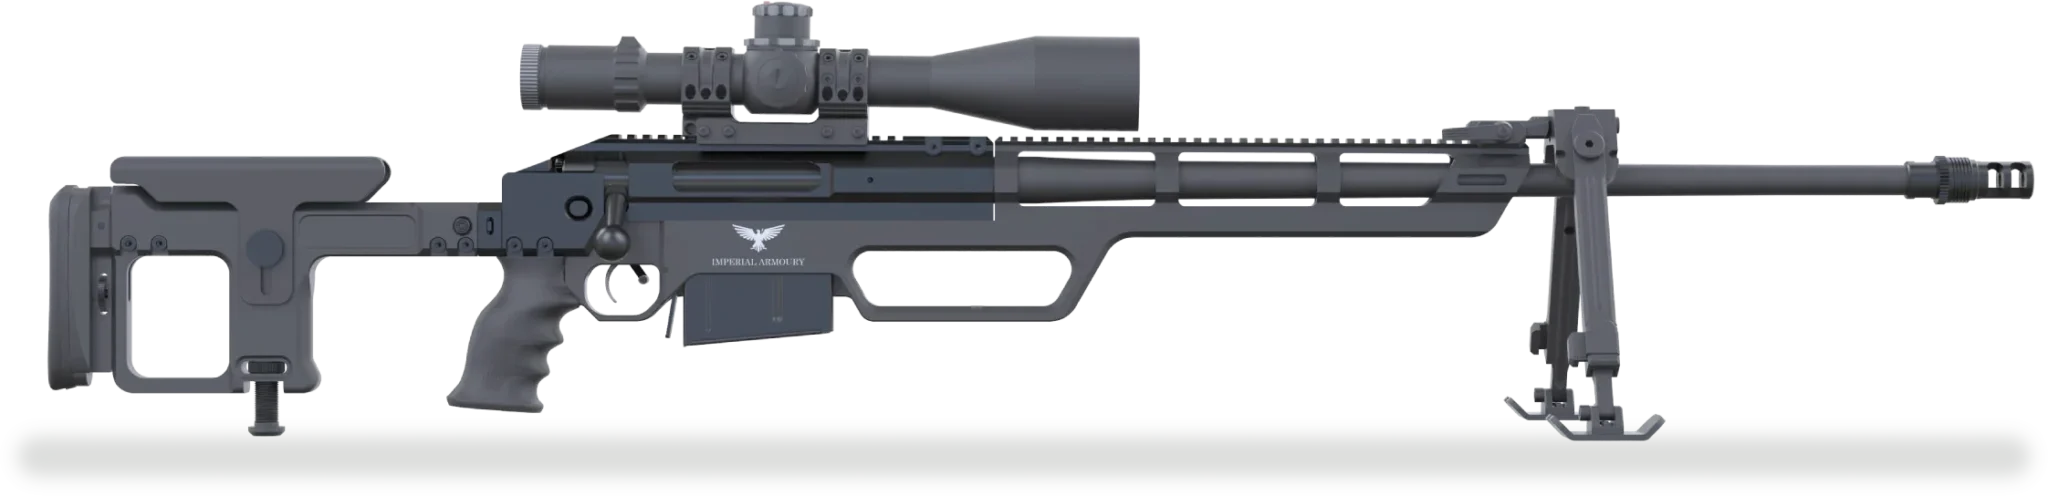 Sniper Rifle Manufacturers